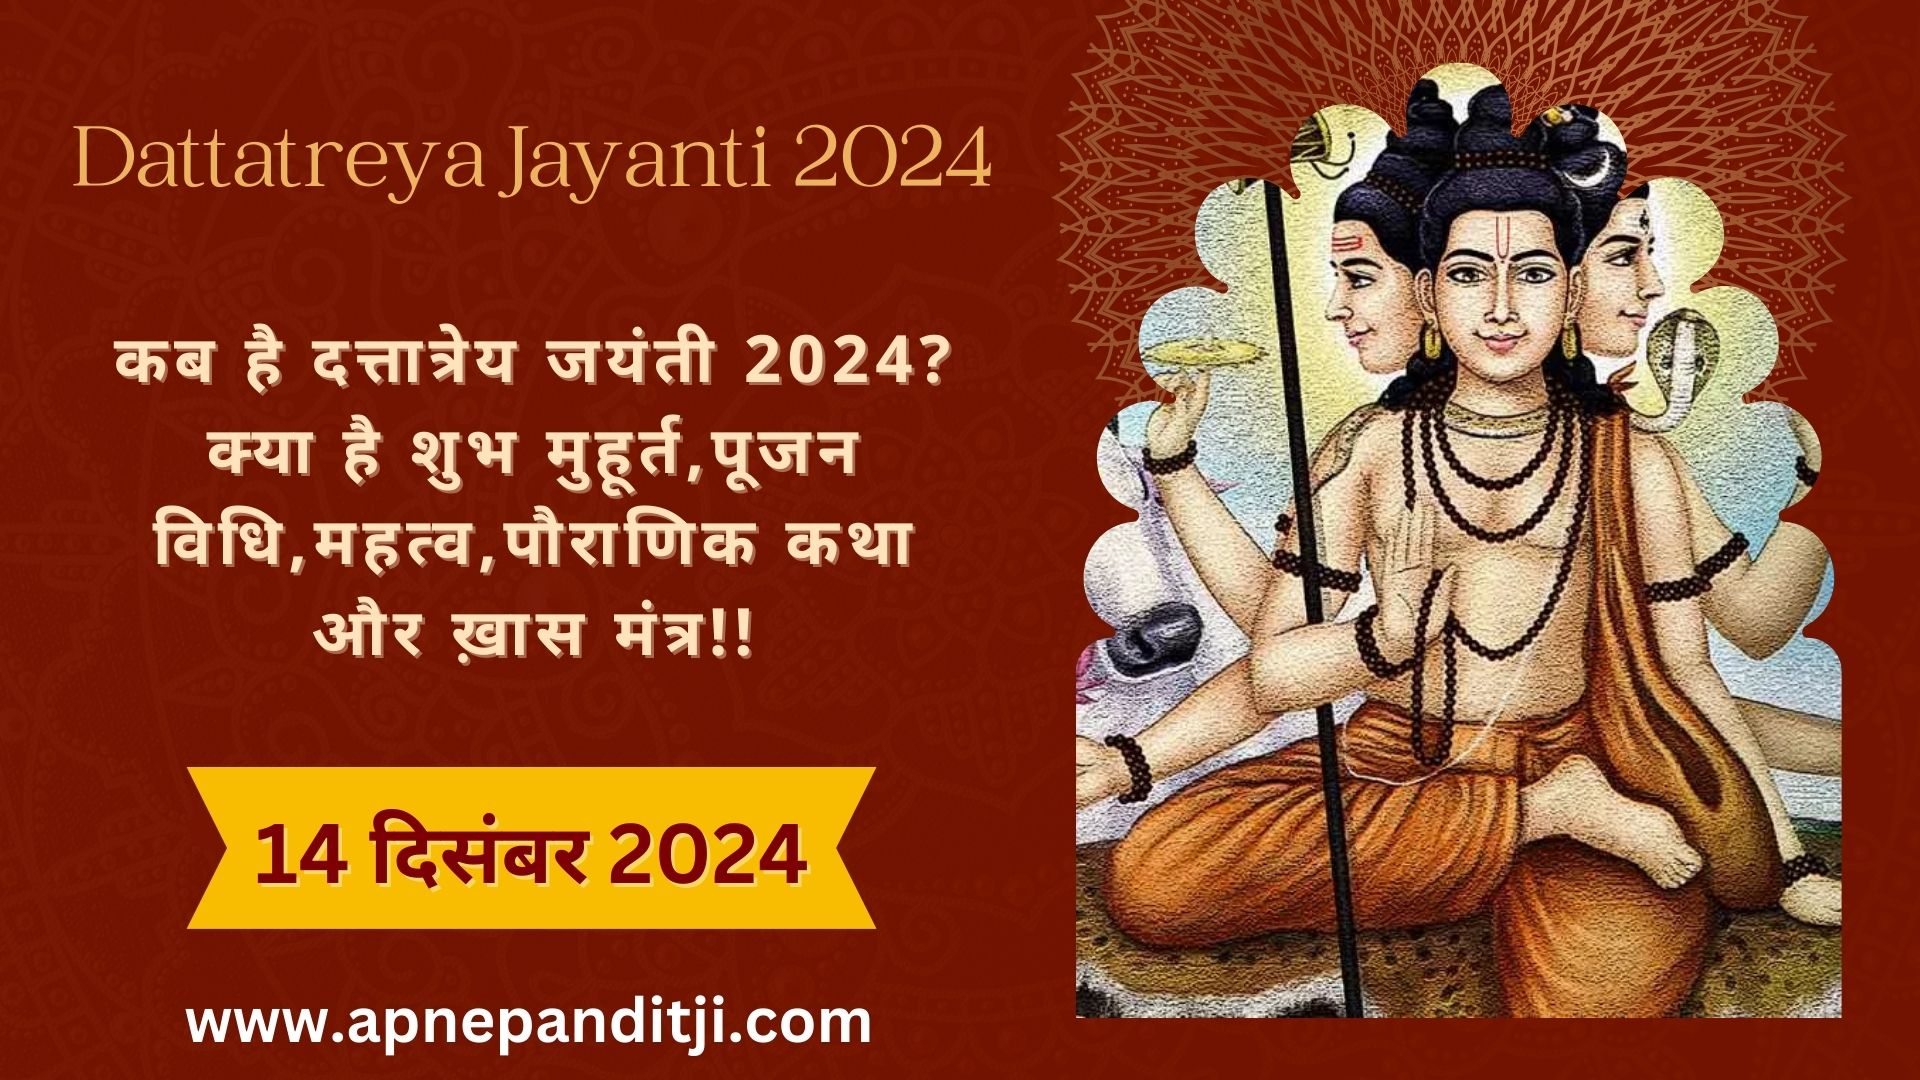 dttatreya jayanti 2024